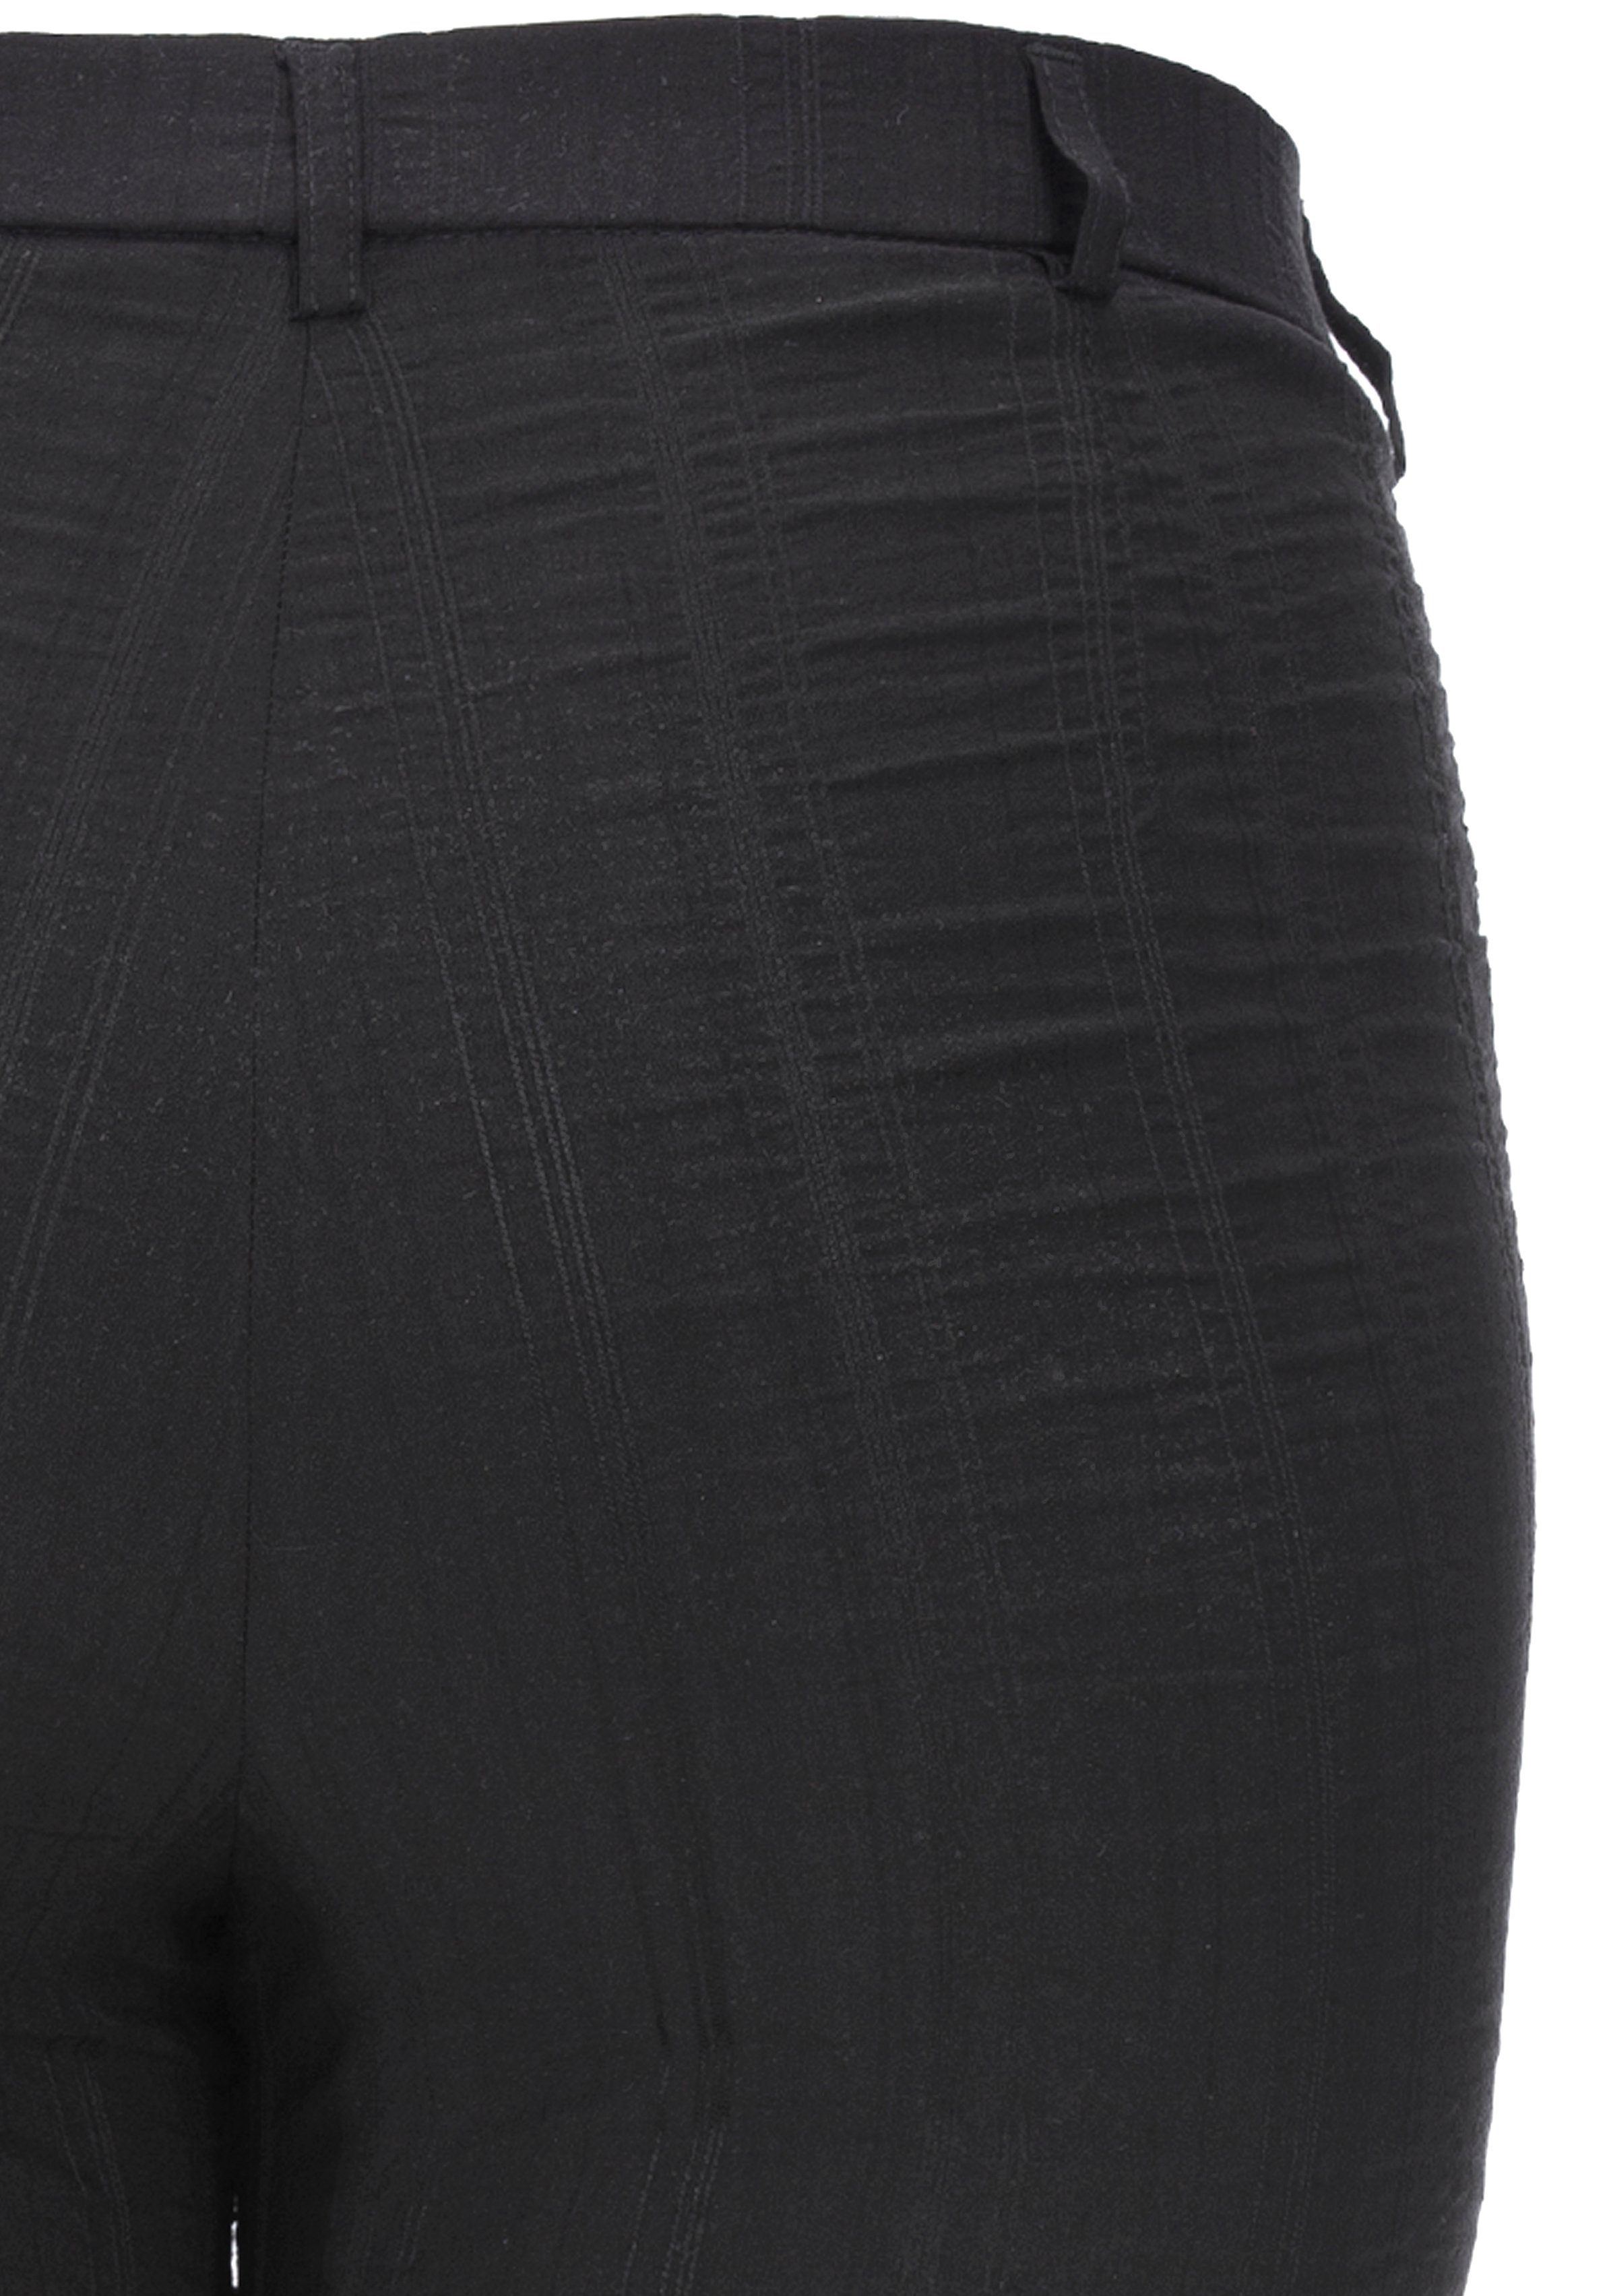 KjBRAND Bea in Stoffhose Passform schwarz gestreift optimale Quer-Stretch